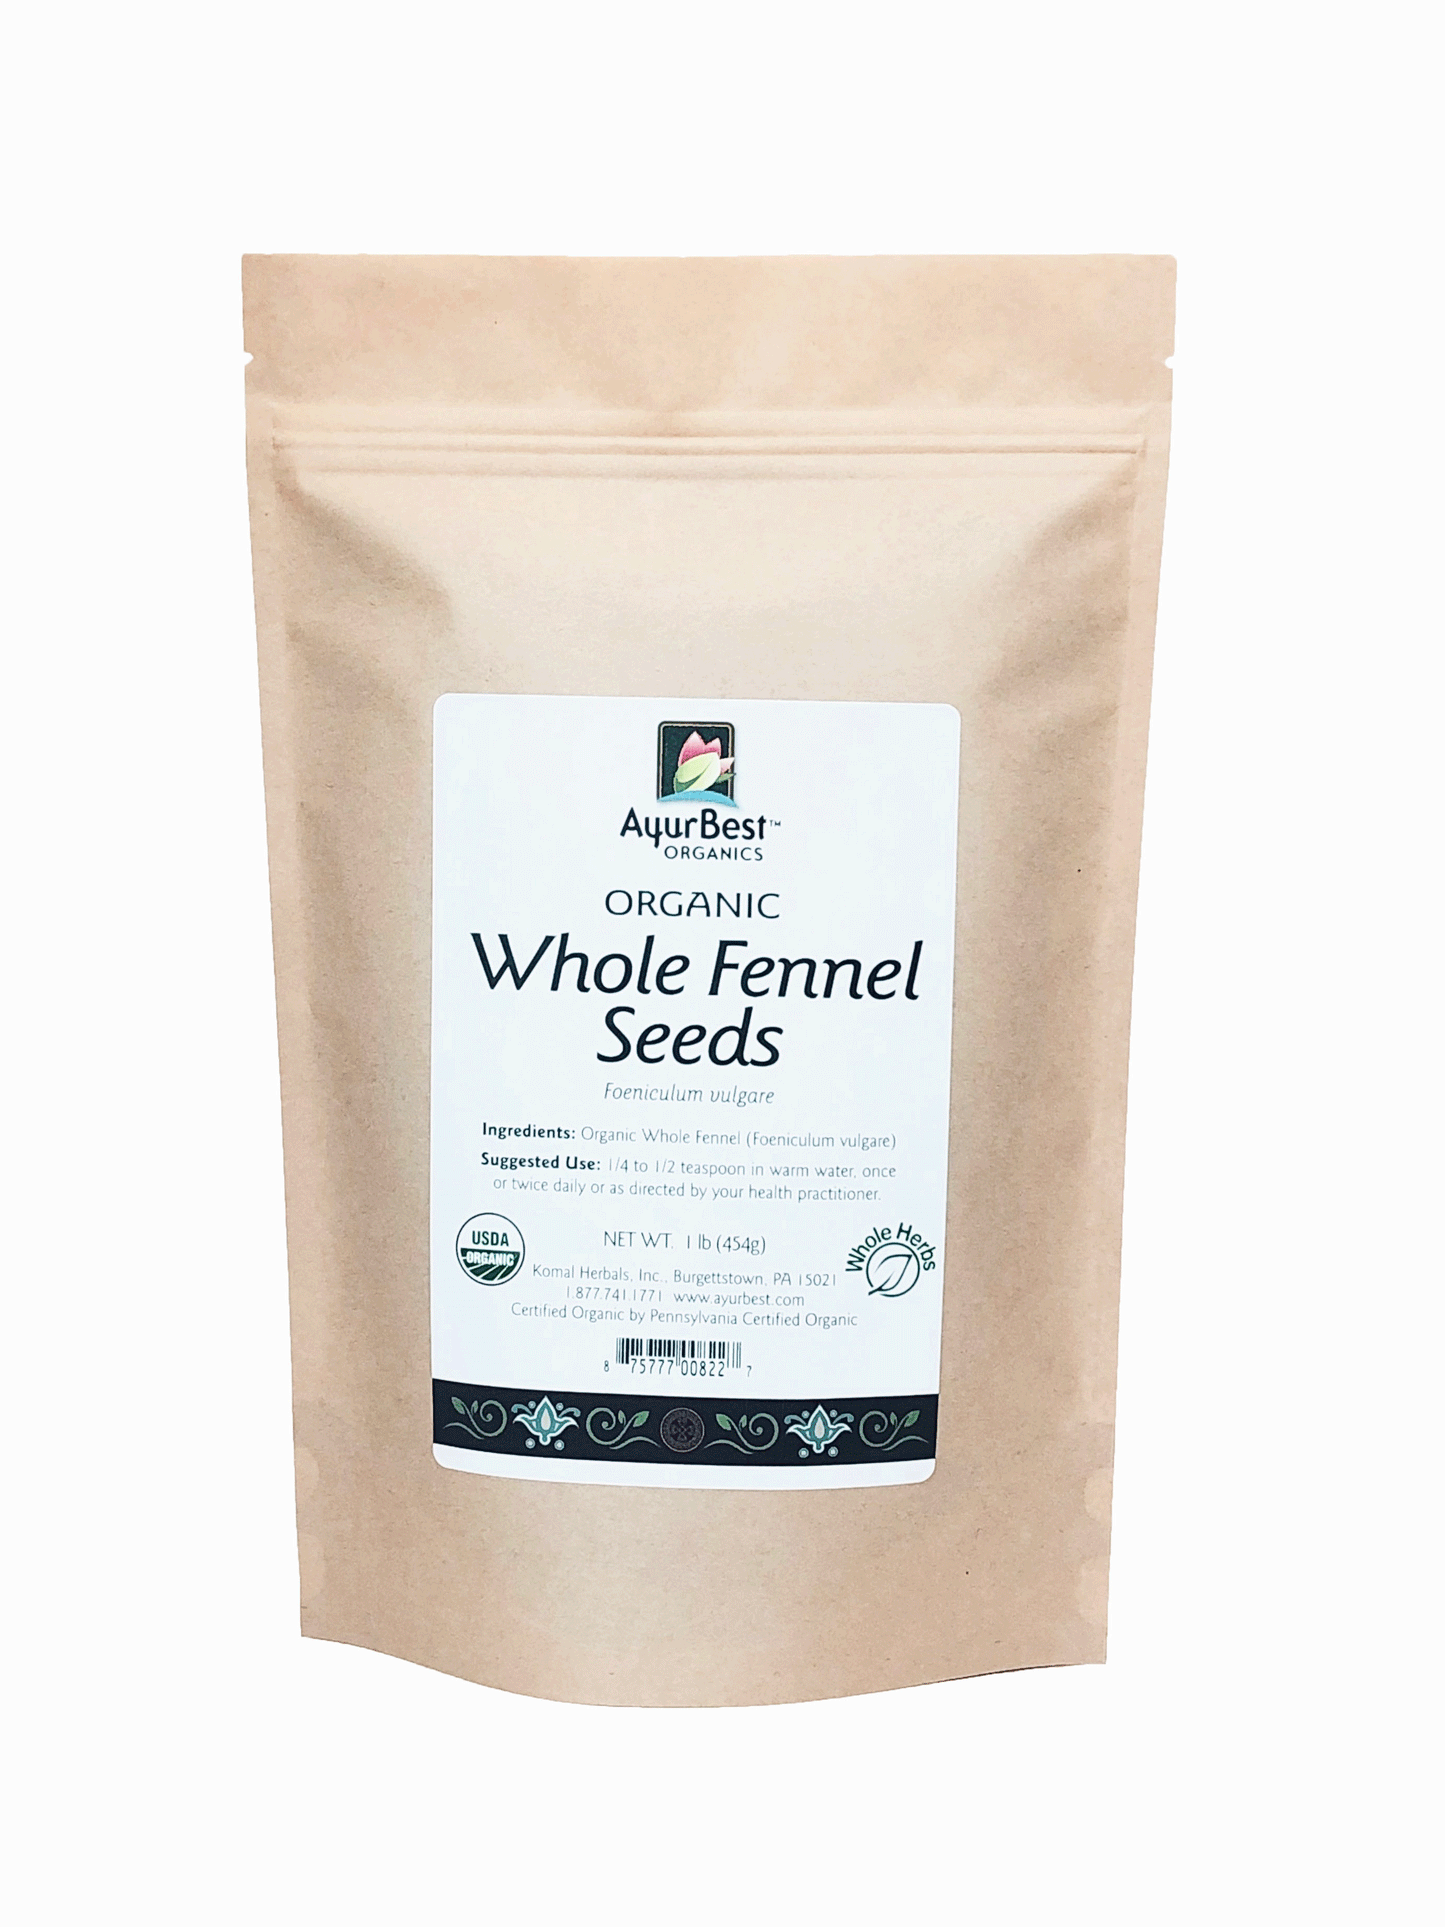 Buy Organic Fennel Seed in 1lb bulk pack.